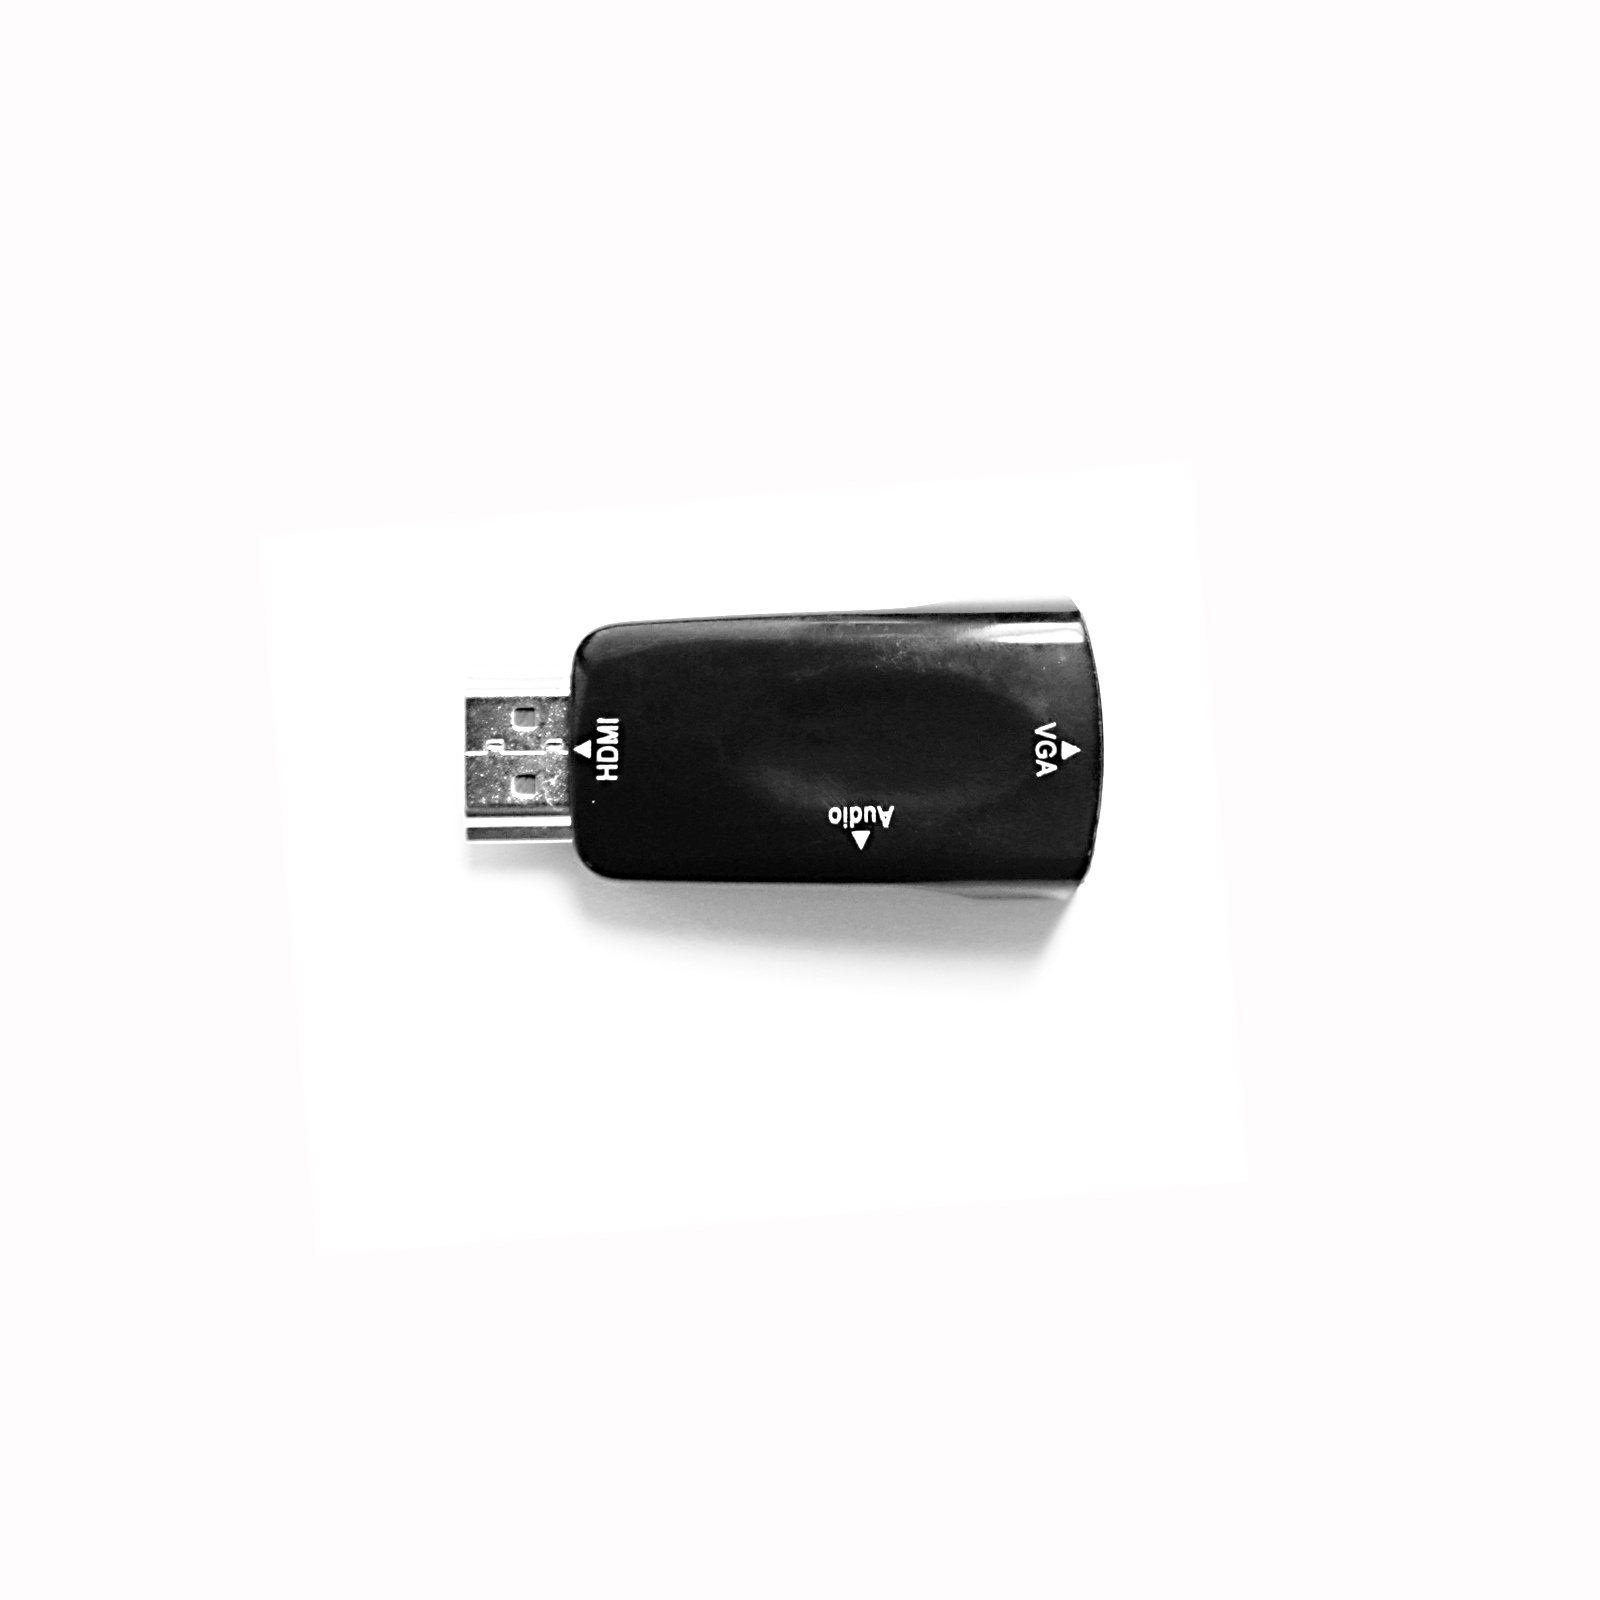 EKON Type-C male to HDMI female adapter